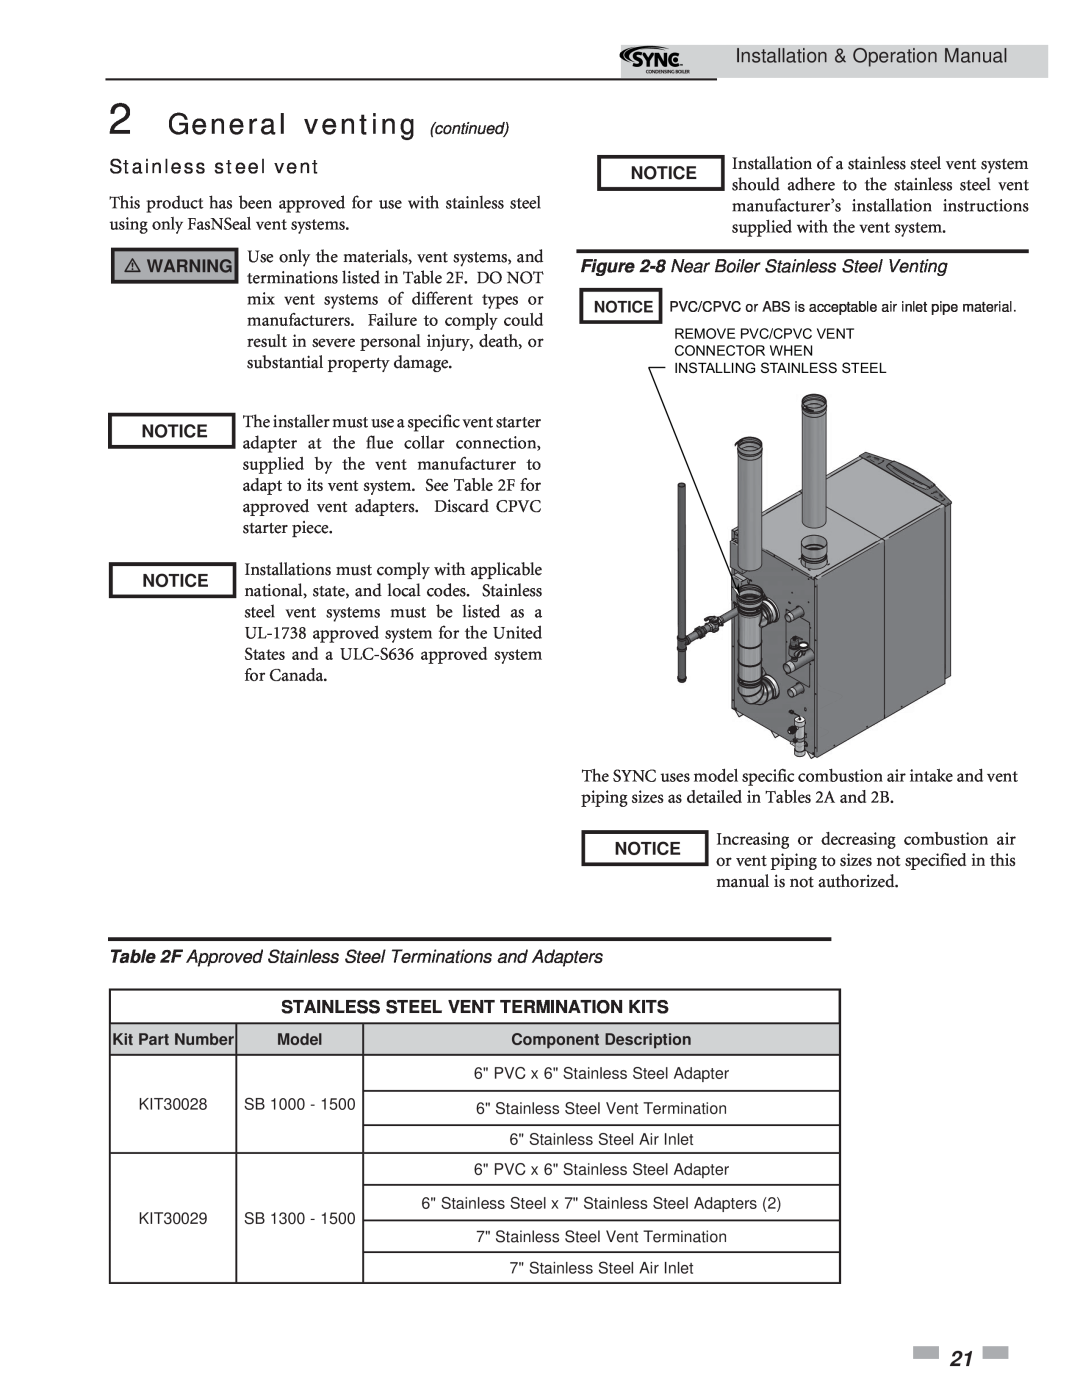 Lochinvar 5 Stainless steel vent, 8 Near Boiler Stainless Steel Venting, Stainless Steel Vent Termination Kits, Notice 